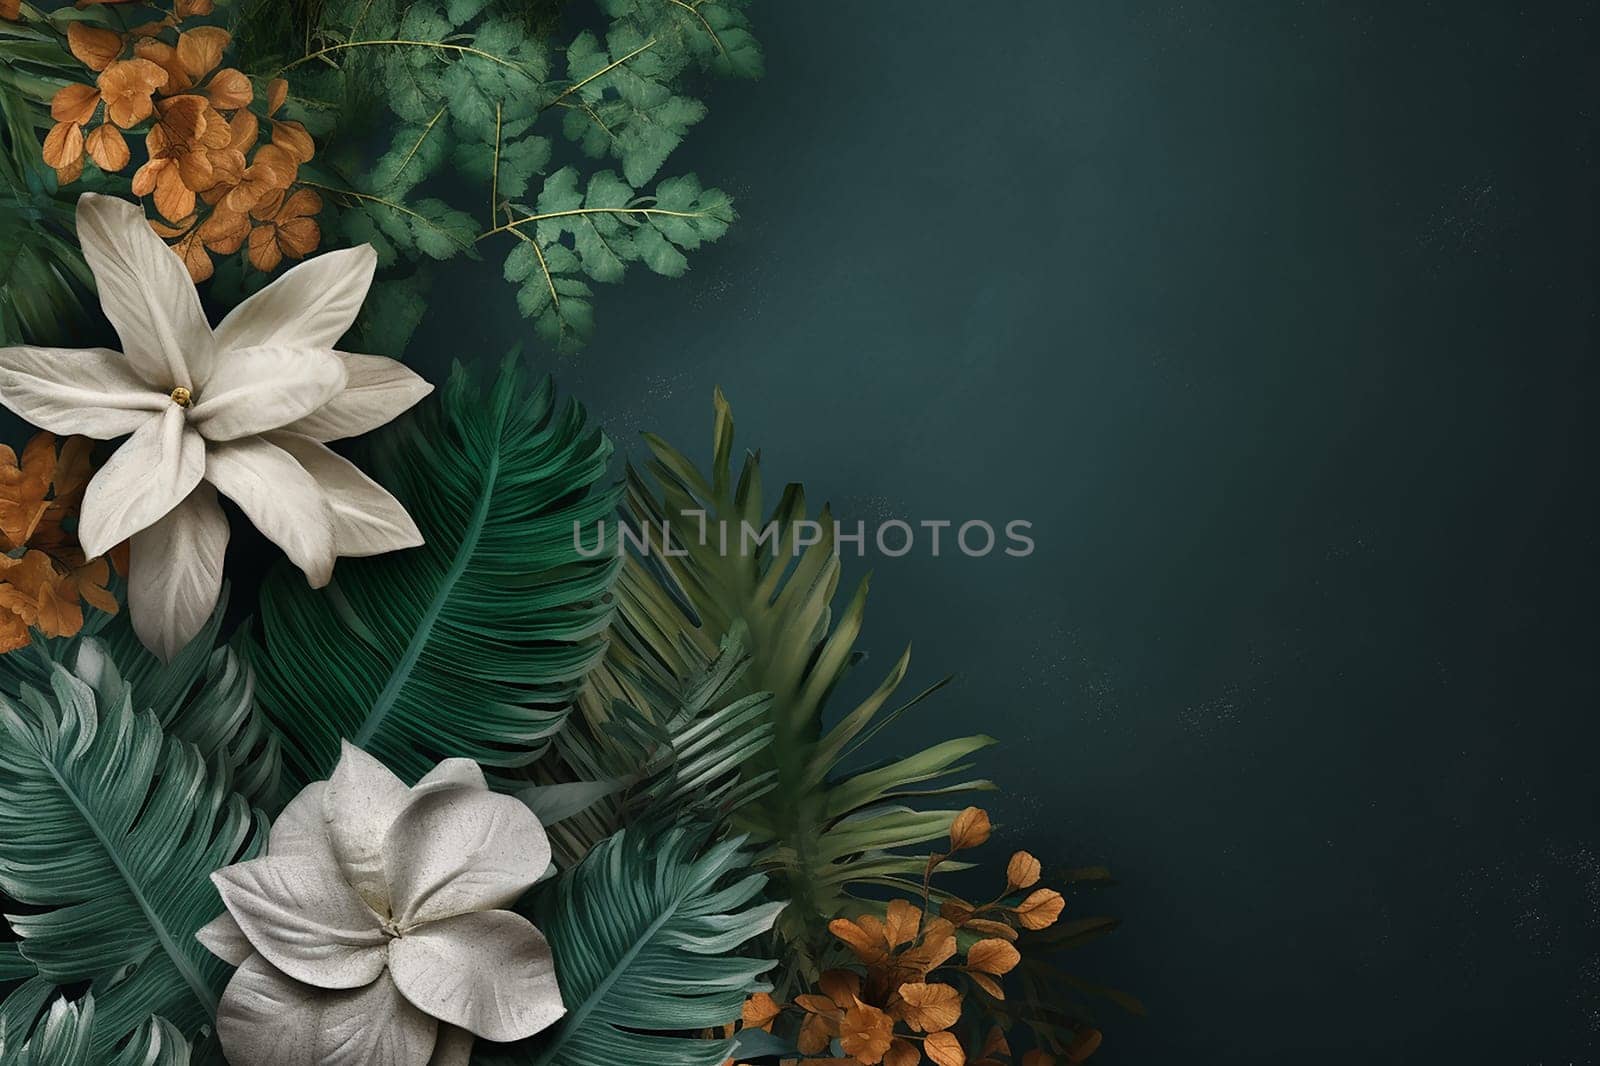 Elegant floral arrangement on a dark green background by Hype2art